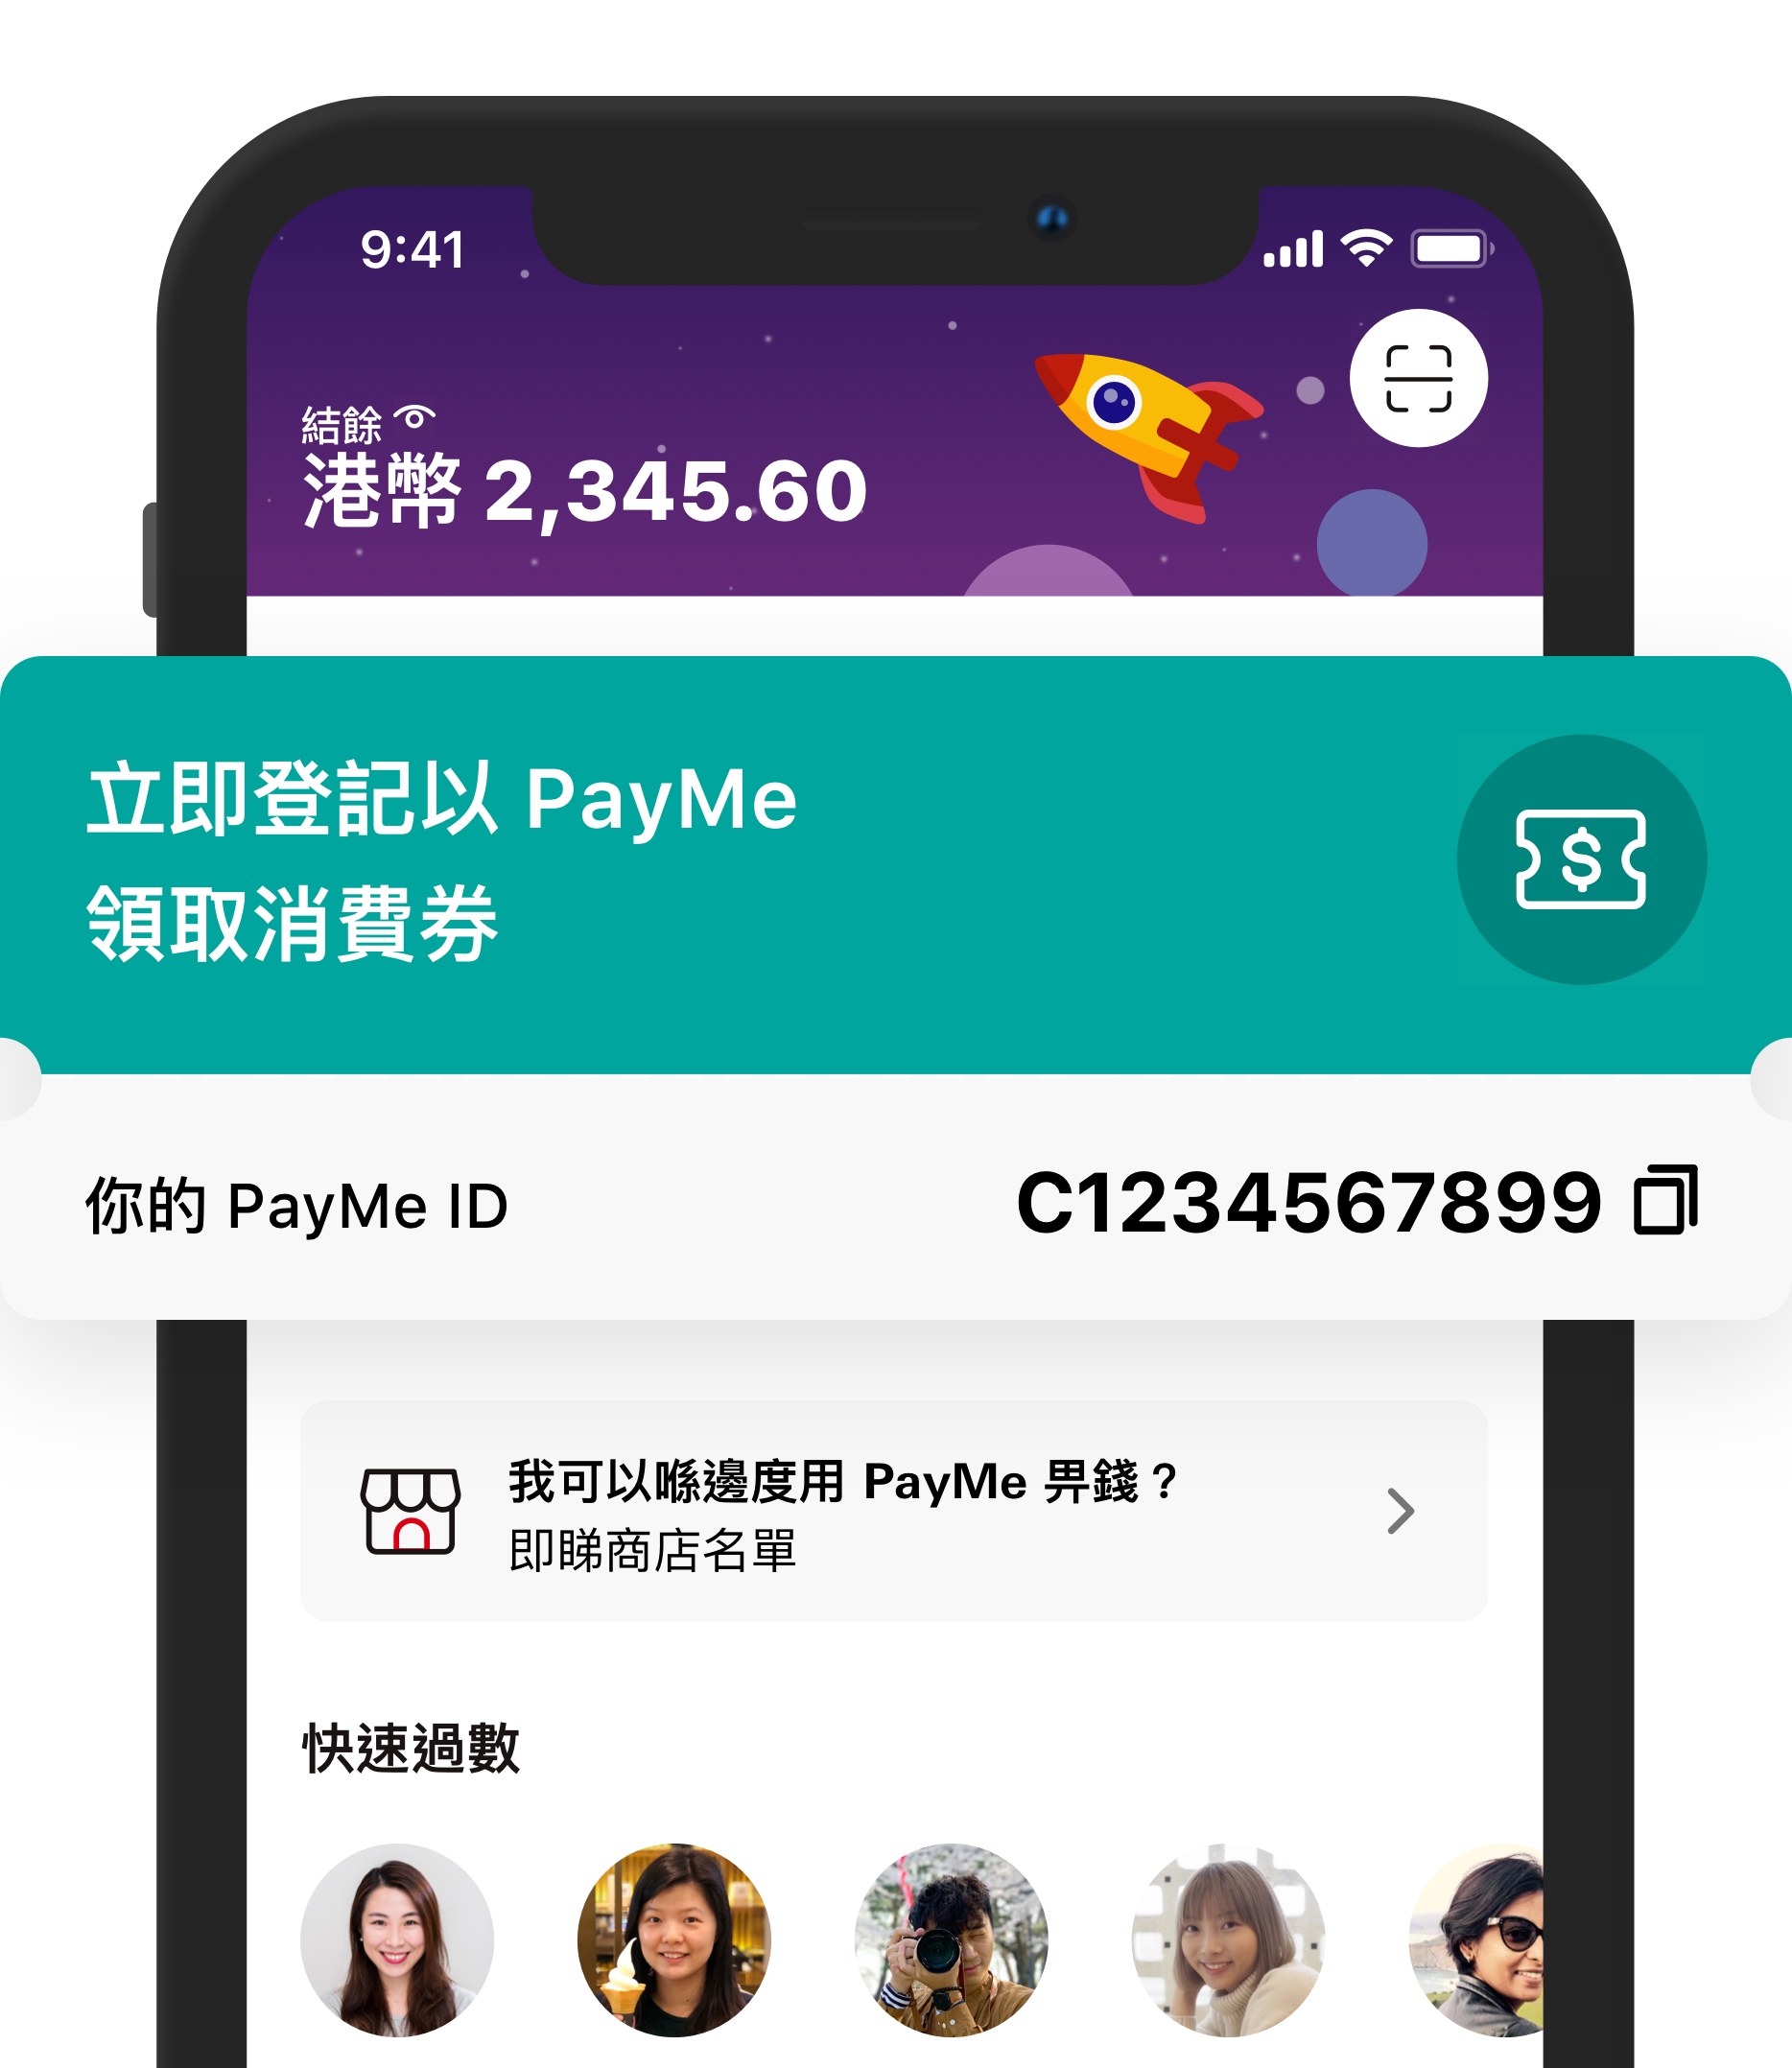 PayMe from HSBC 應用程式內設有消費券計劃專區，用戶可進入專區查看其帳戶的相關號碼（即是用戶的 PayMe ID）